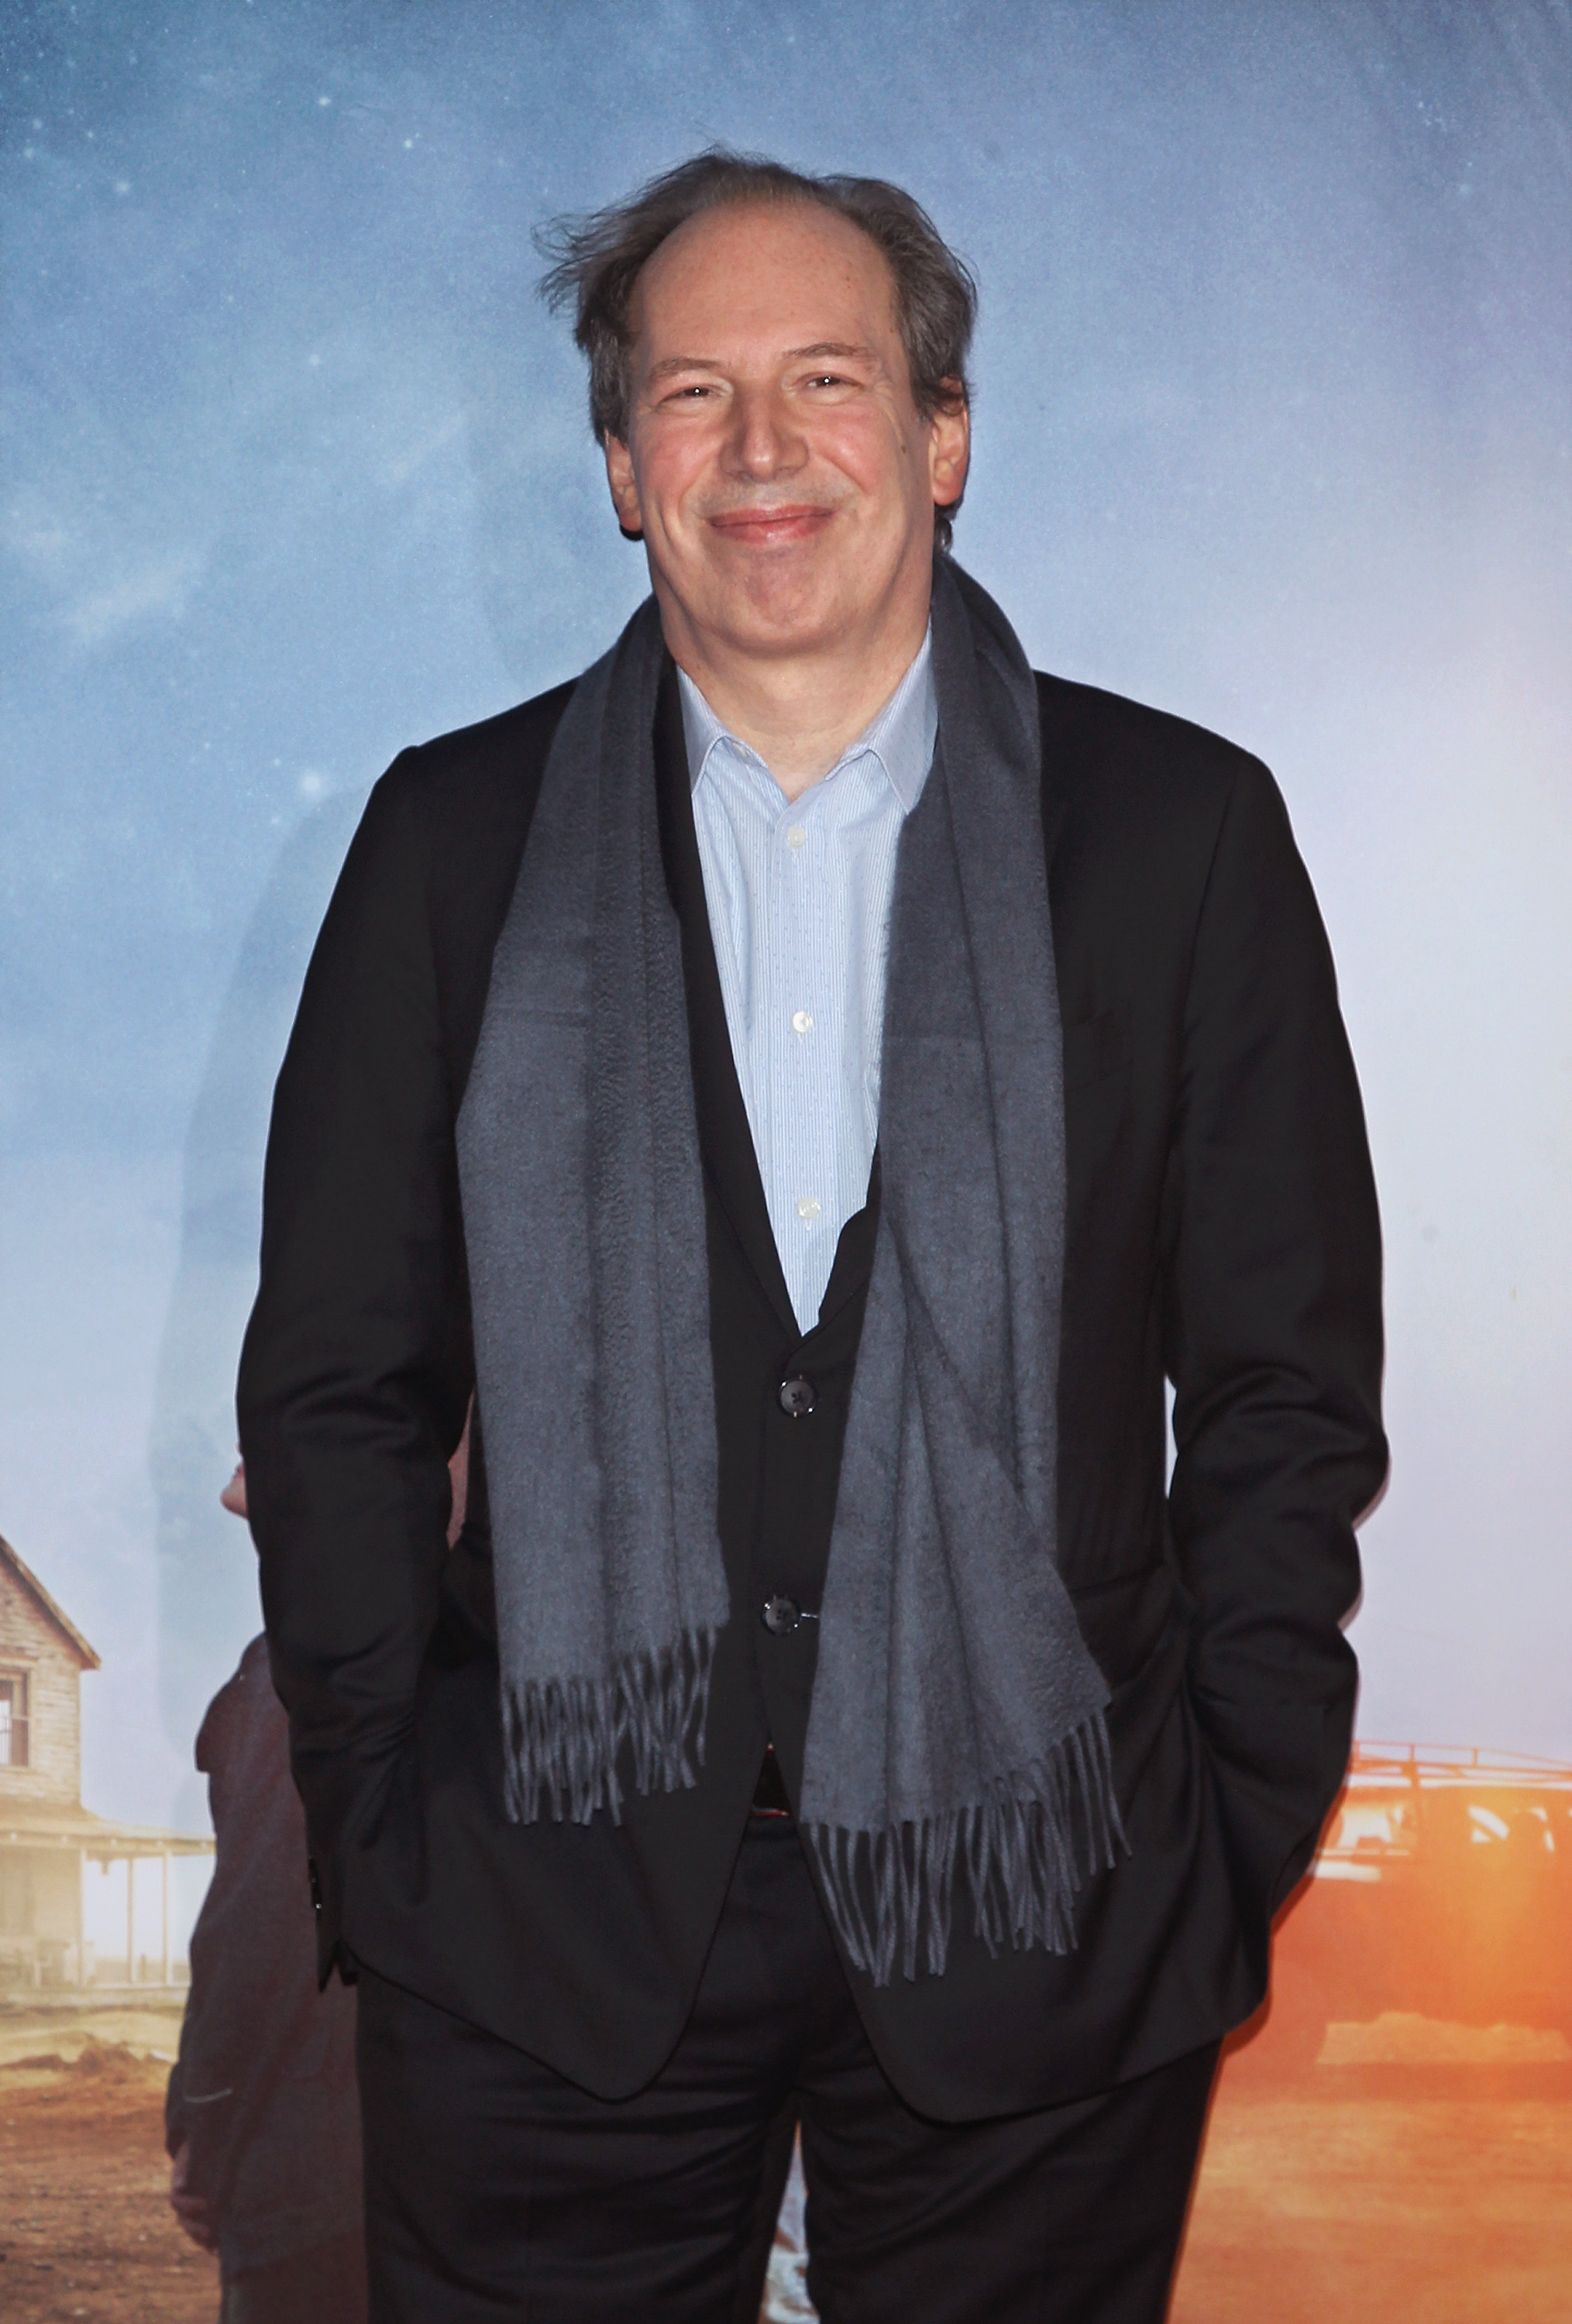 Composer Hans Zimmer attends the 'Interstellar' New York Premiere on Nov. 3, 2014 in New York City.